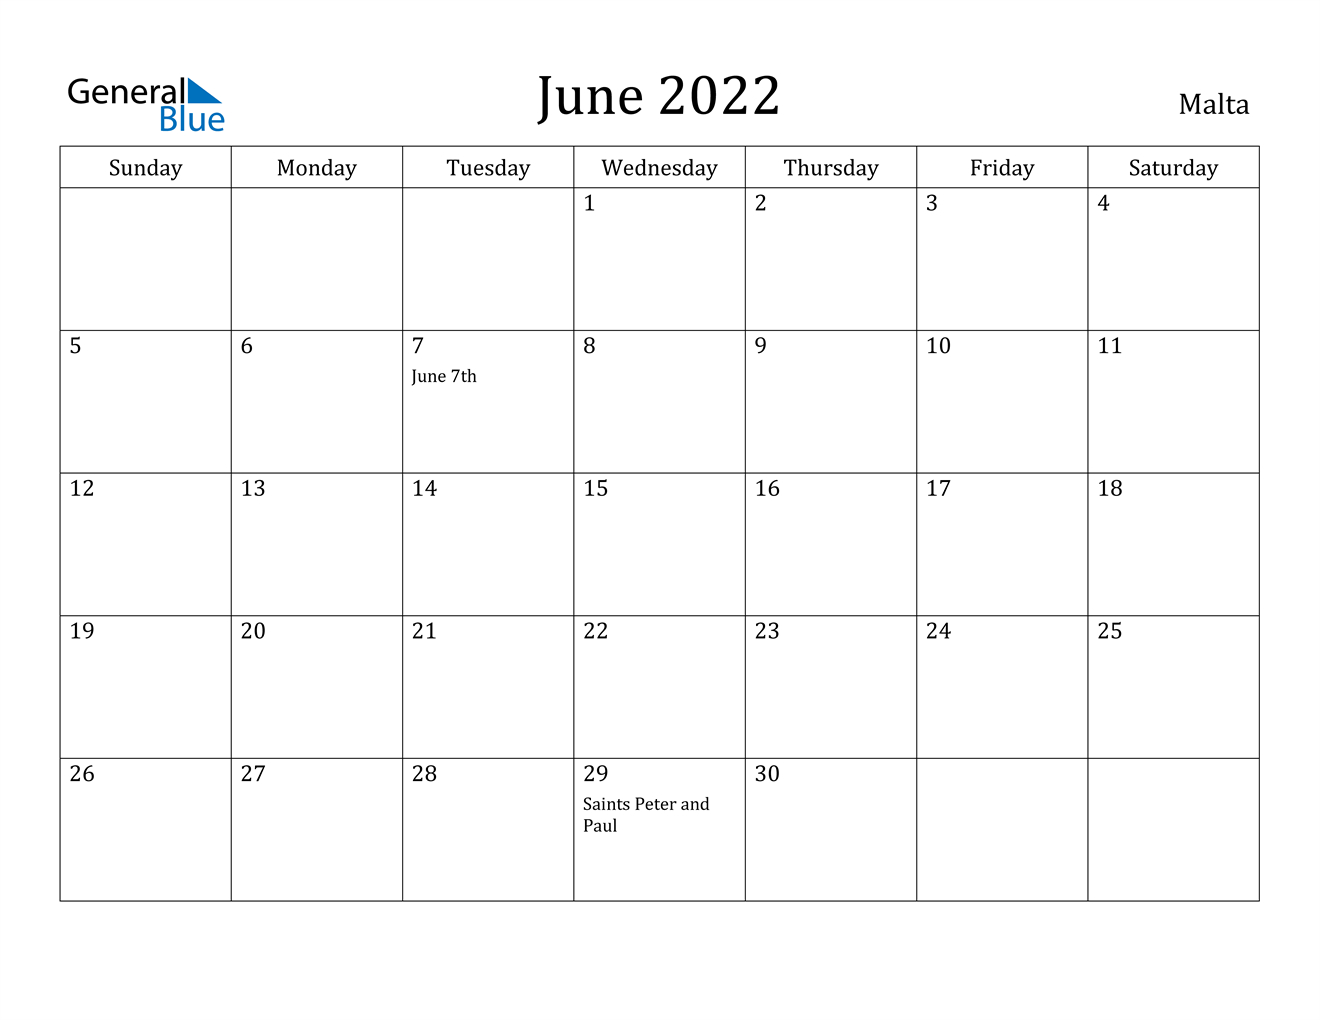 June 2022 Calendar - Malta